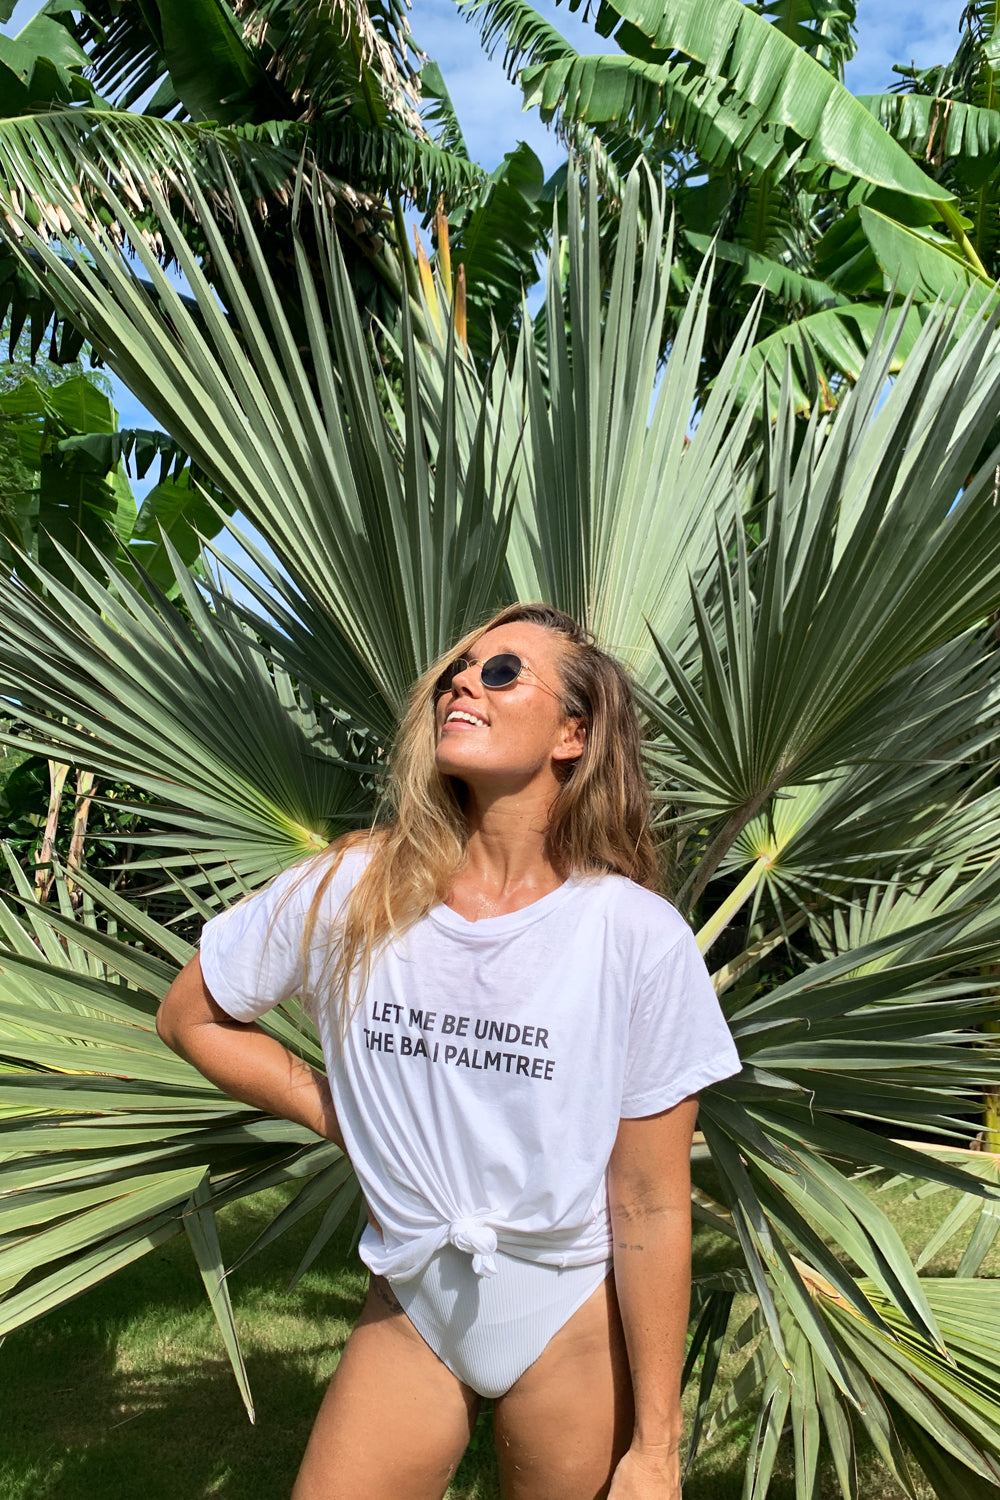 Under the Bali palmtree T-shirt